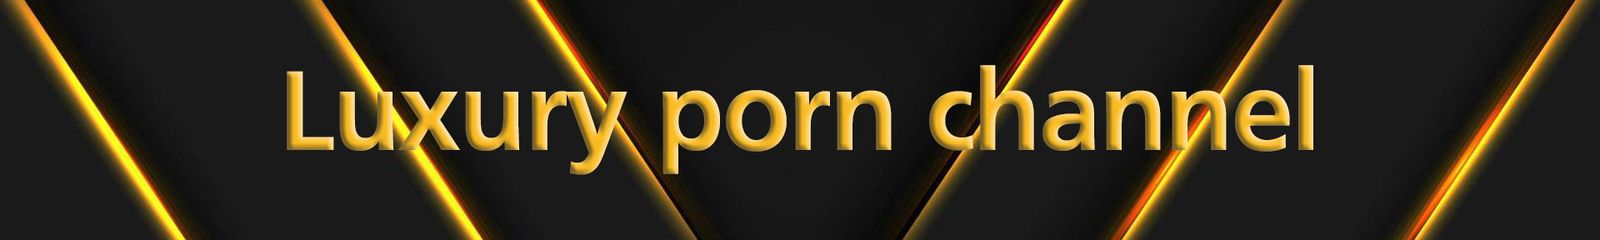 Luxury porn channel